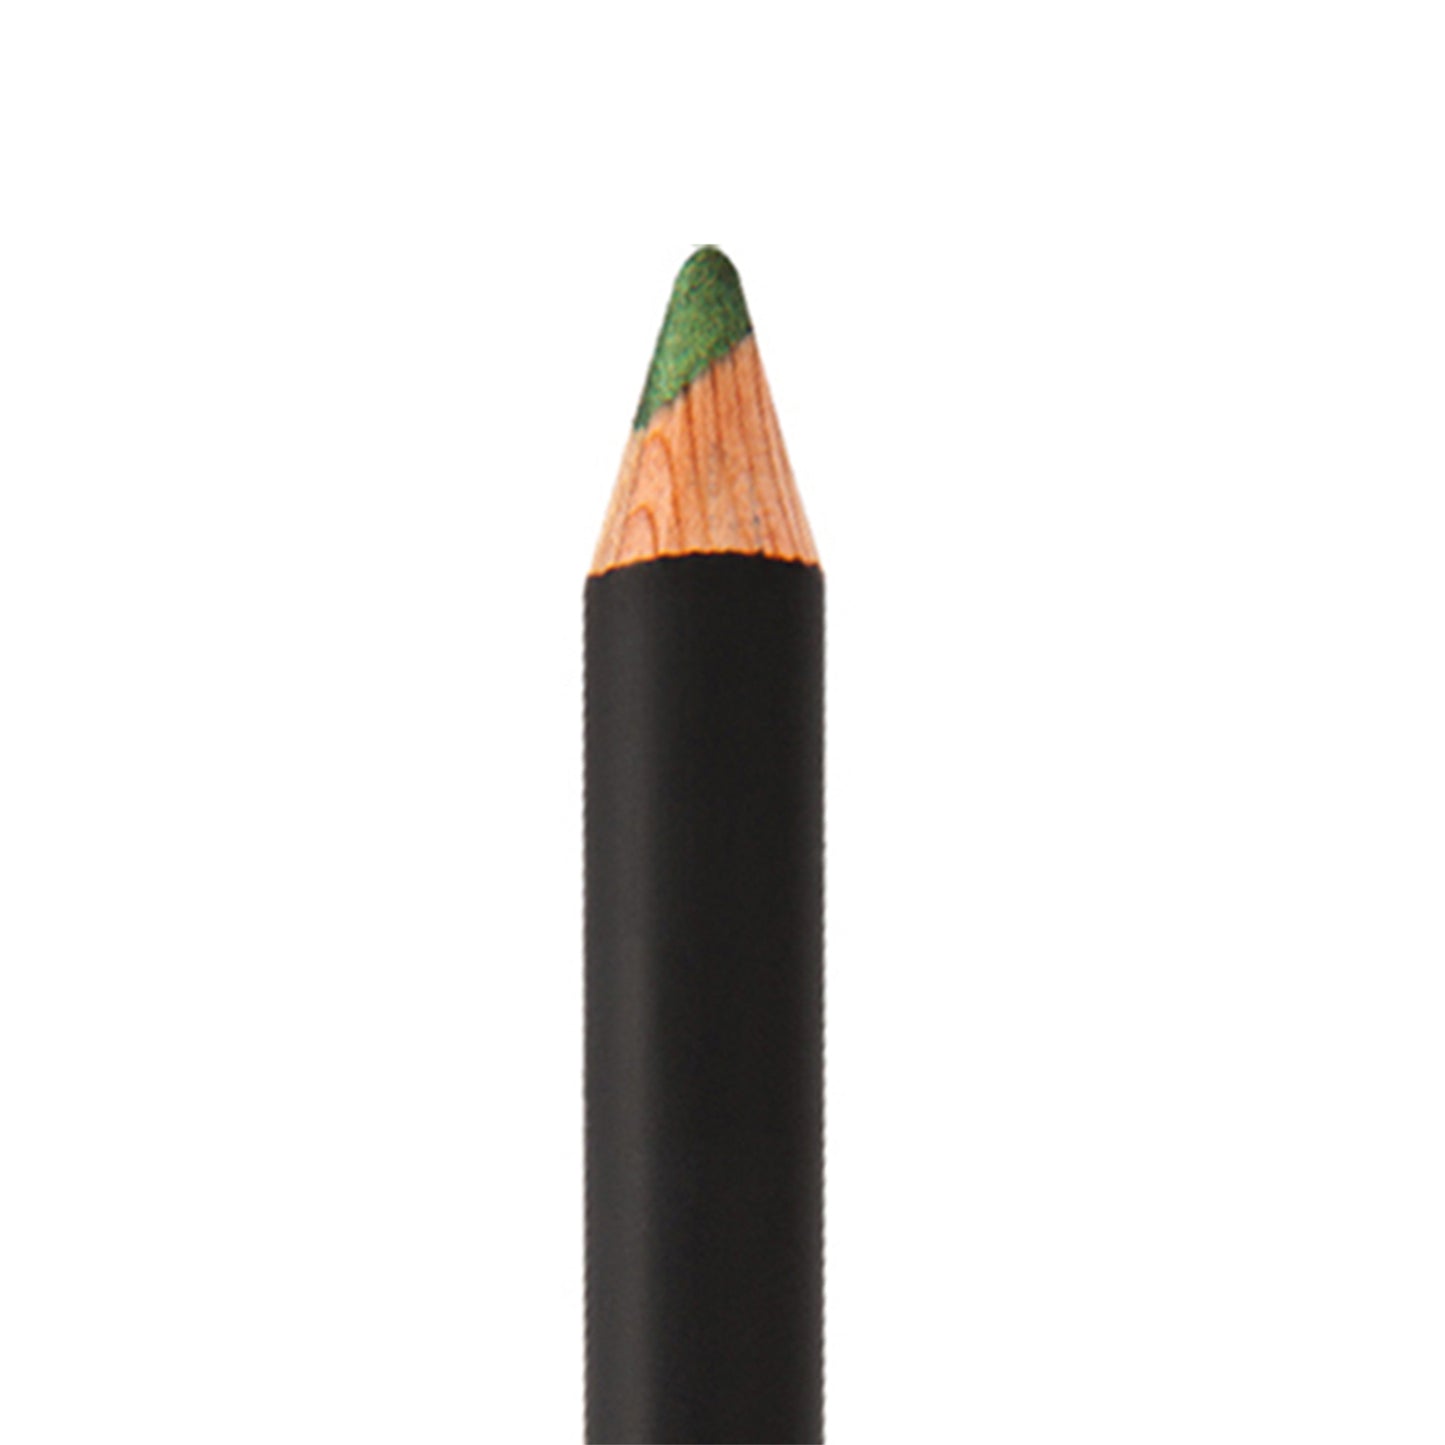 Pierre Cardin Eyeliner Long Lasting Fascinating Green 205 - 0,4 gr